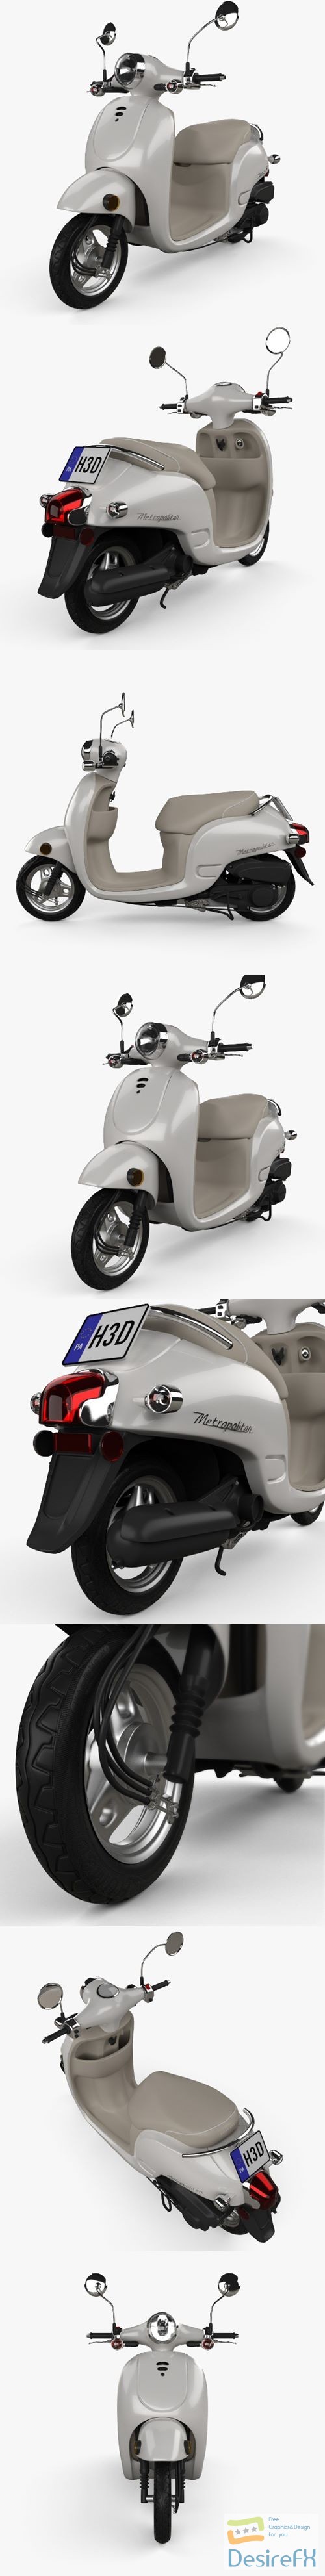 Honda Metropolitan 2013 3D Model